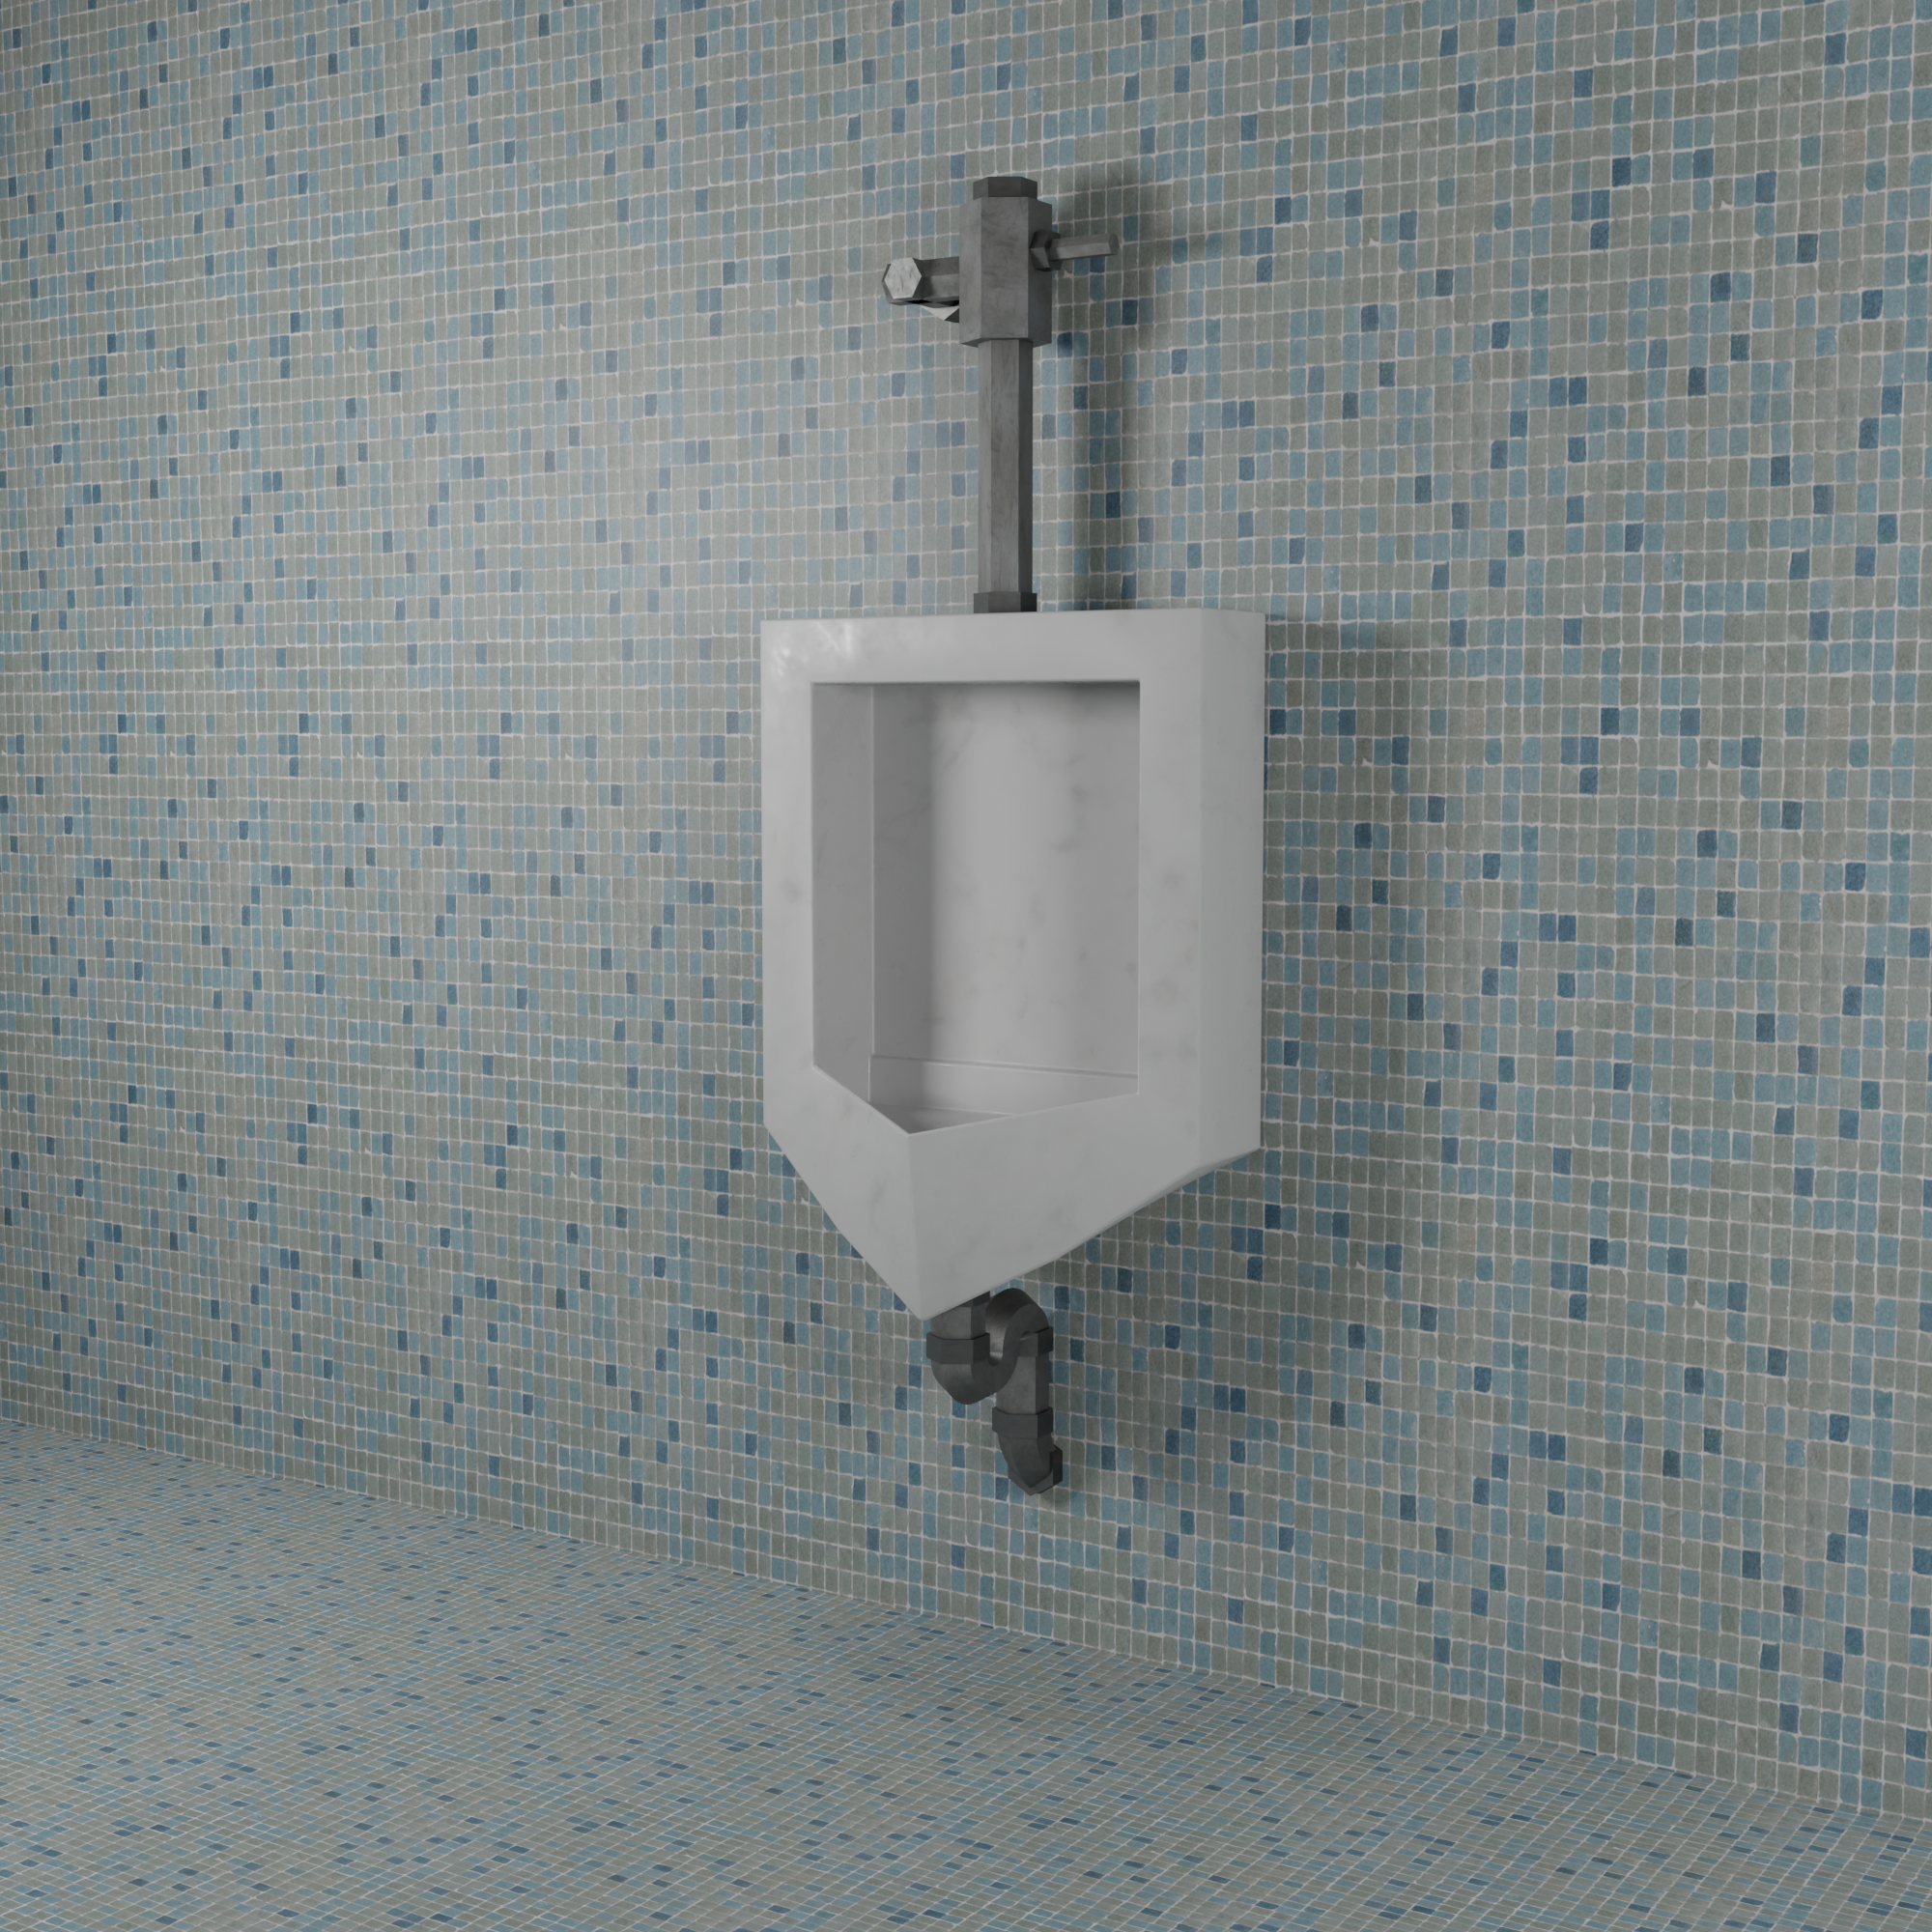 Bathroom Urinal preview image 1